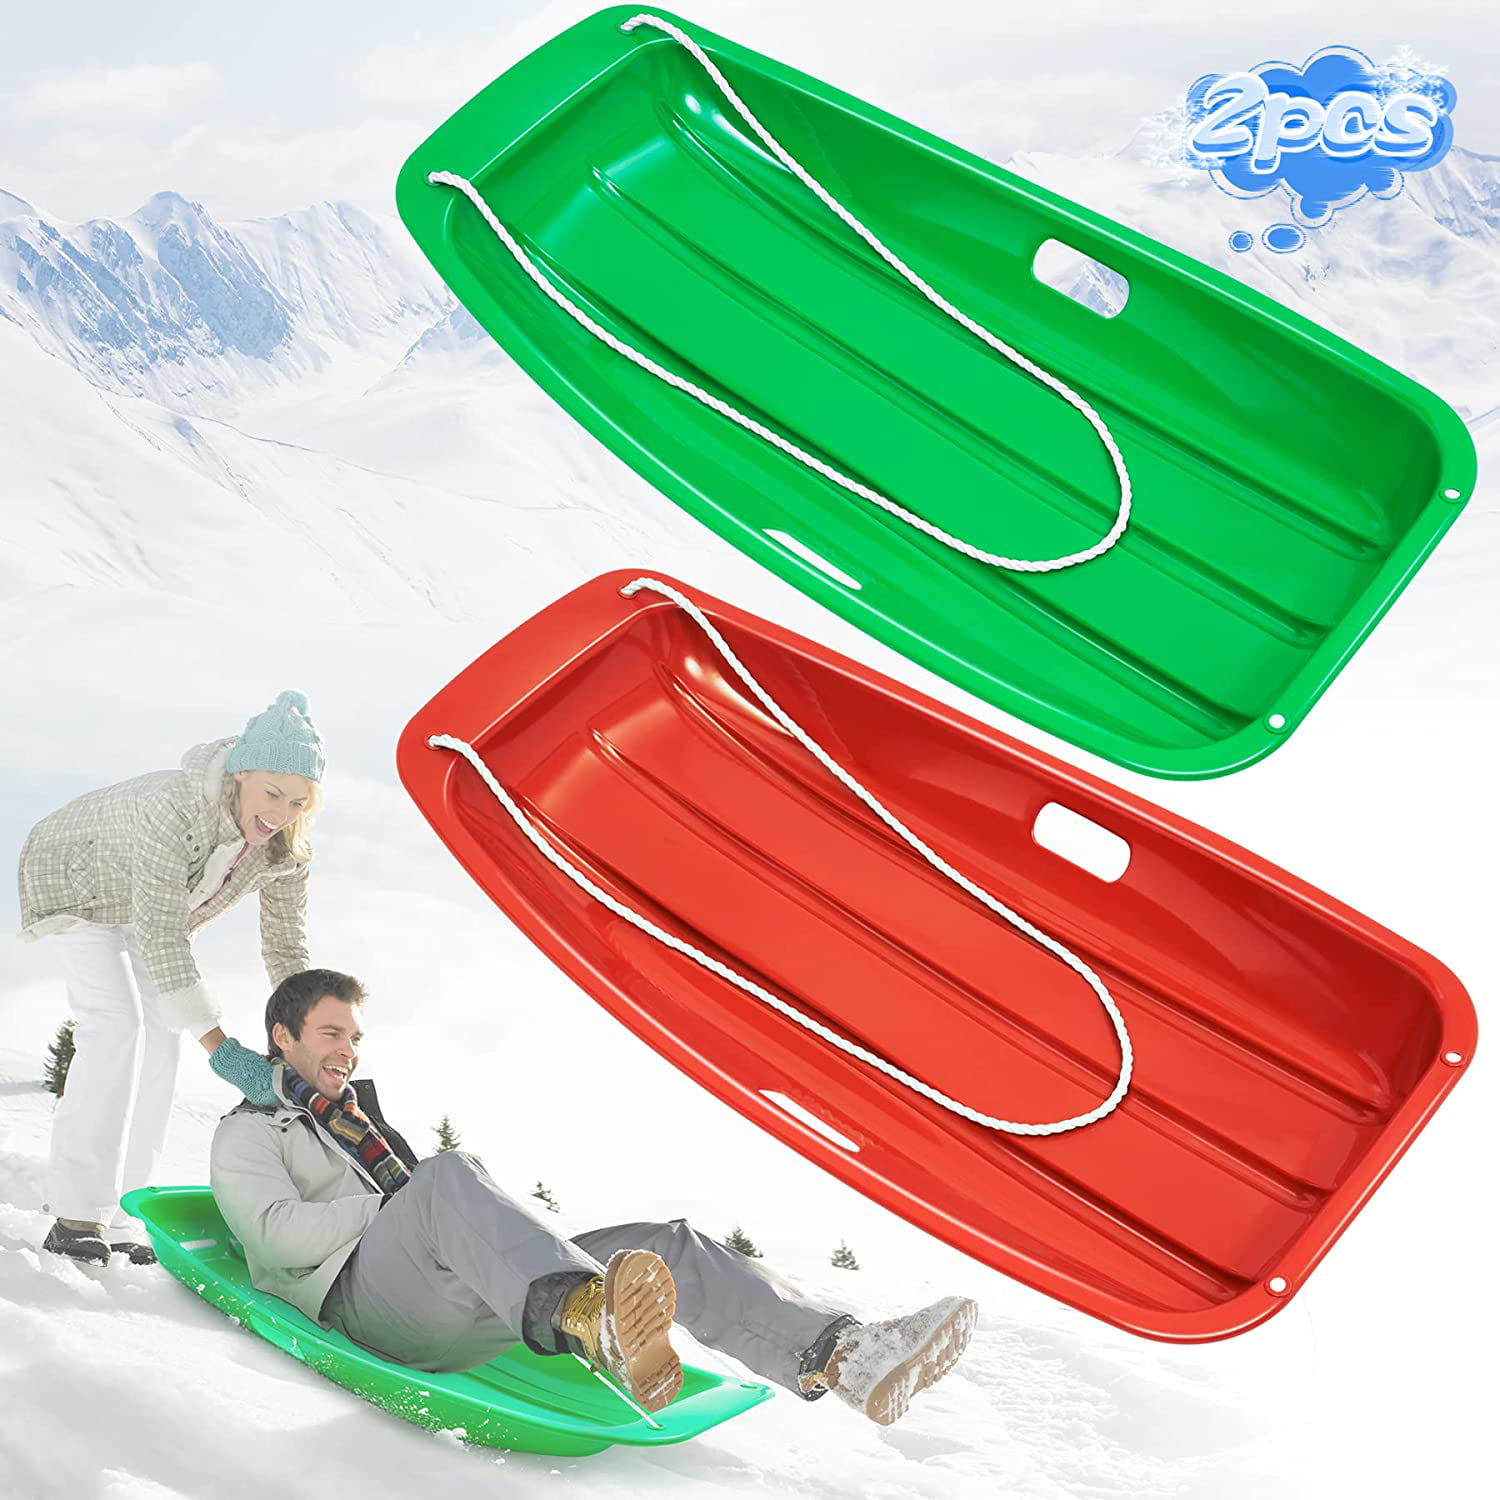 SNOW SLEDGE KIDS HEAVY DUTY TOBOGGAN SLEIGH SLED ROPE PLASTIC OUTDOOR SKI BOARD 